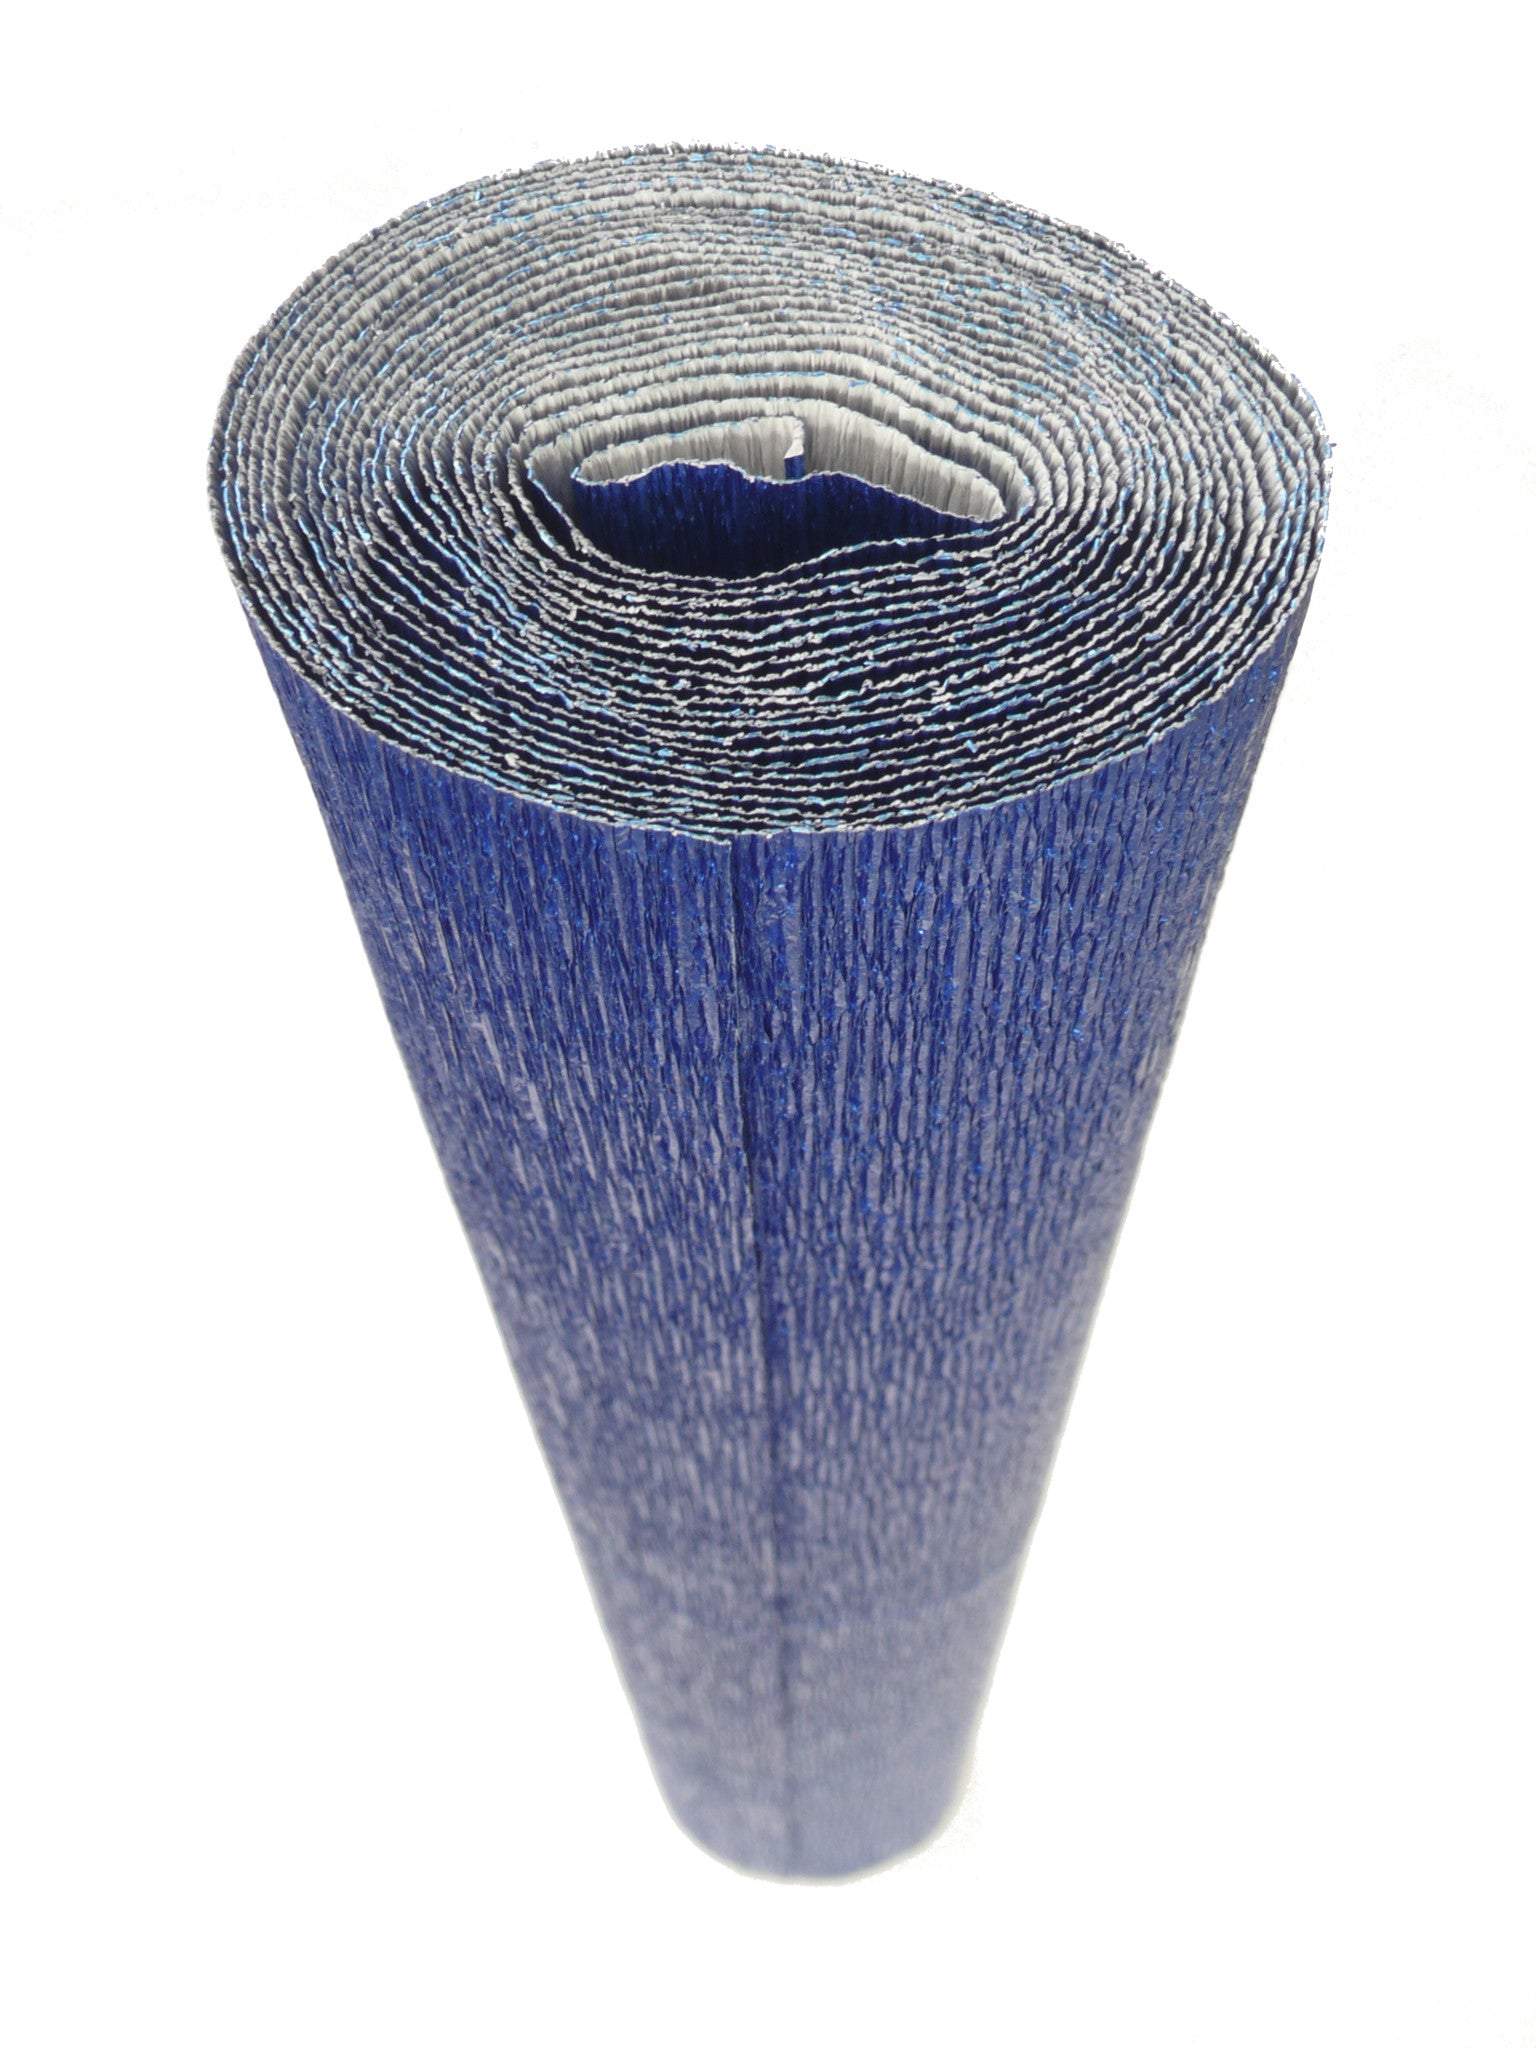 blue carpet rolls